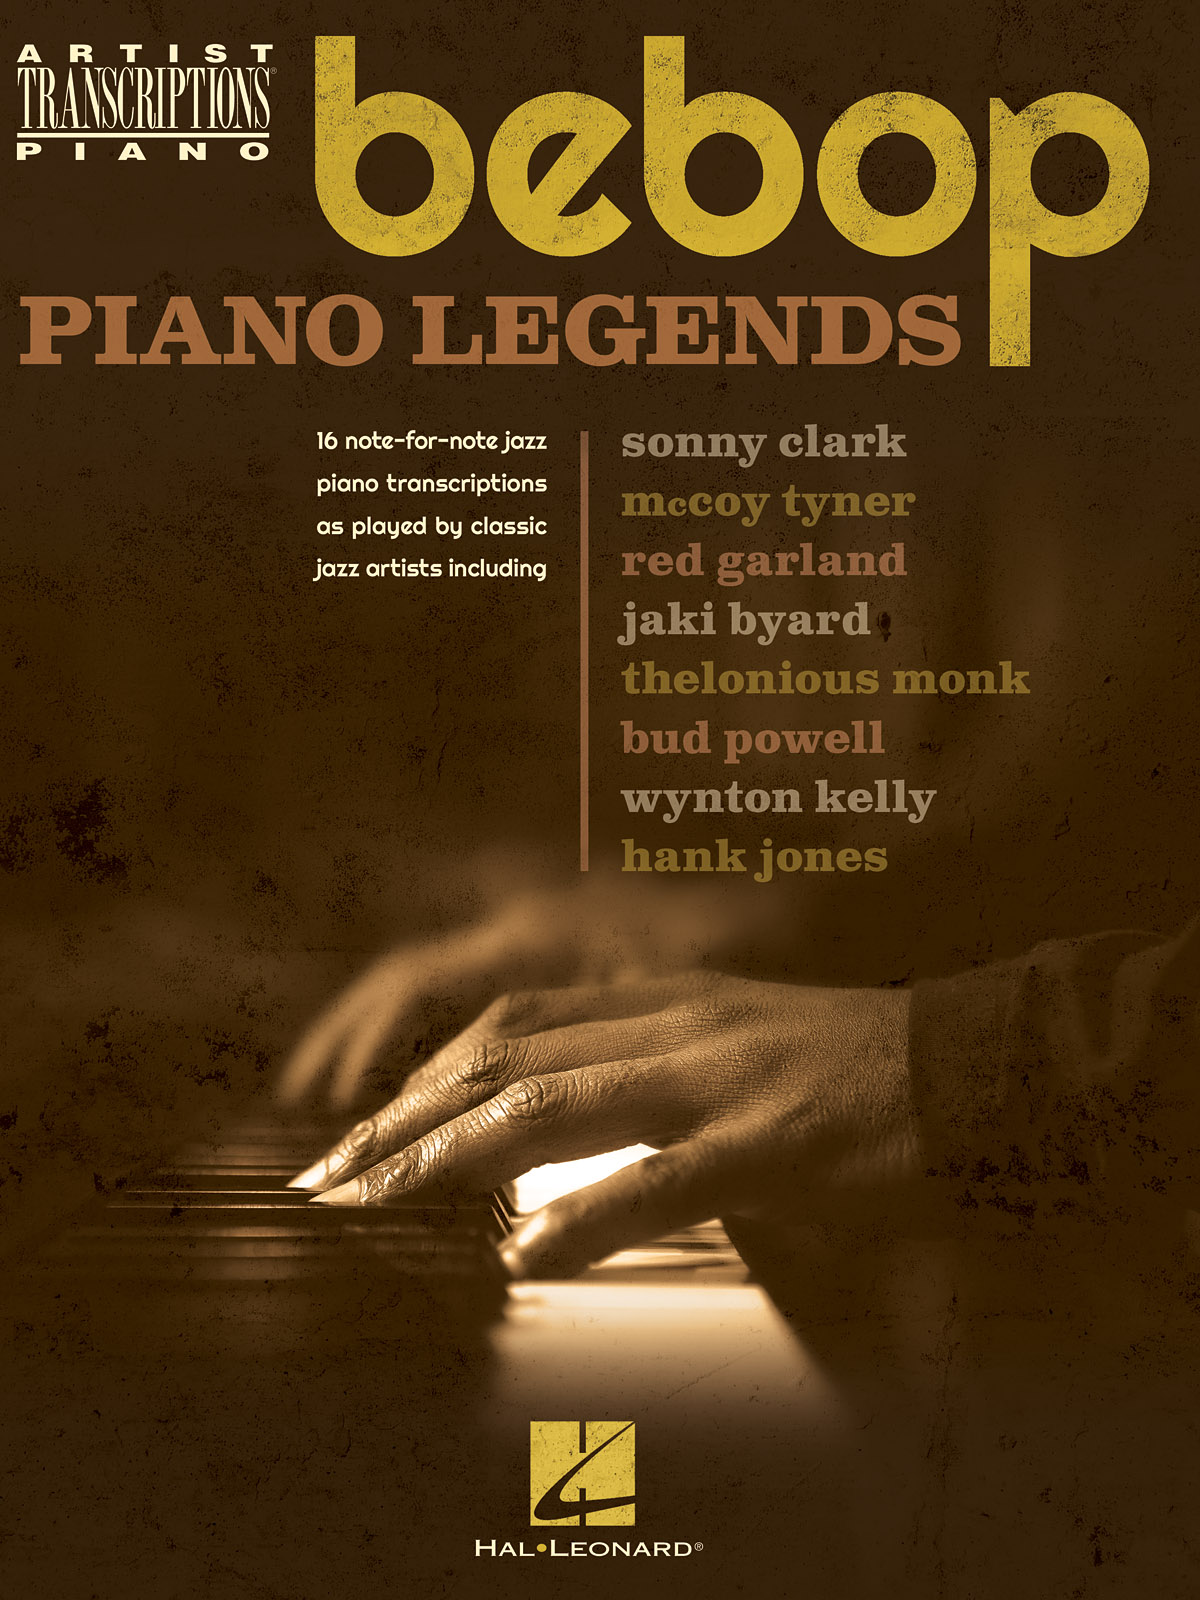 Bebop Piano Legends - Artist Transciptions for Piano - filmové melodie na klavír